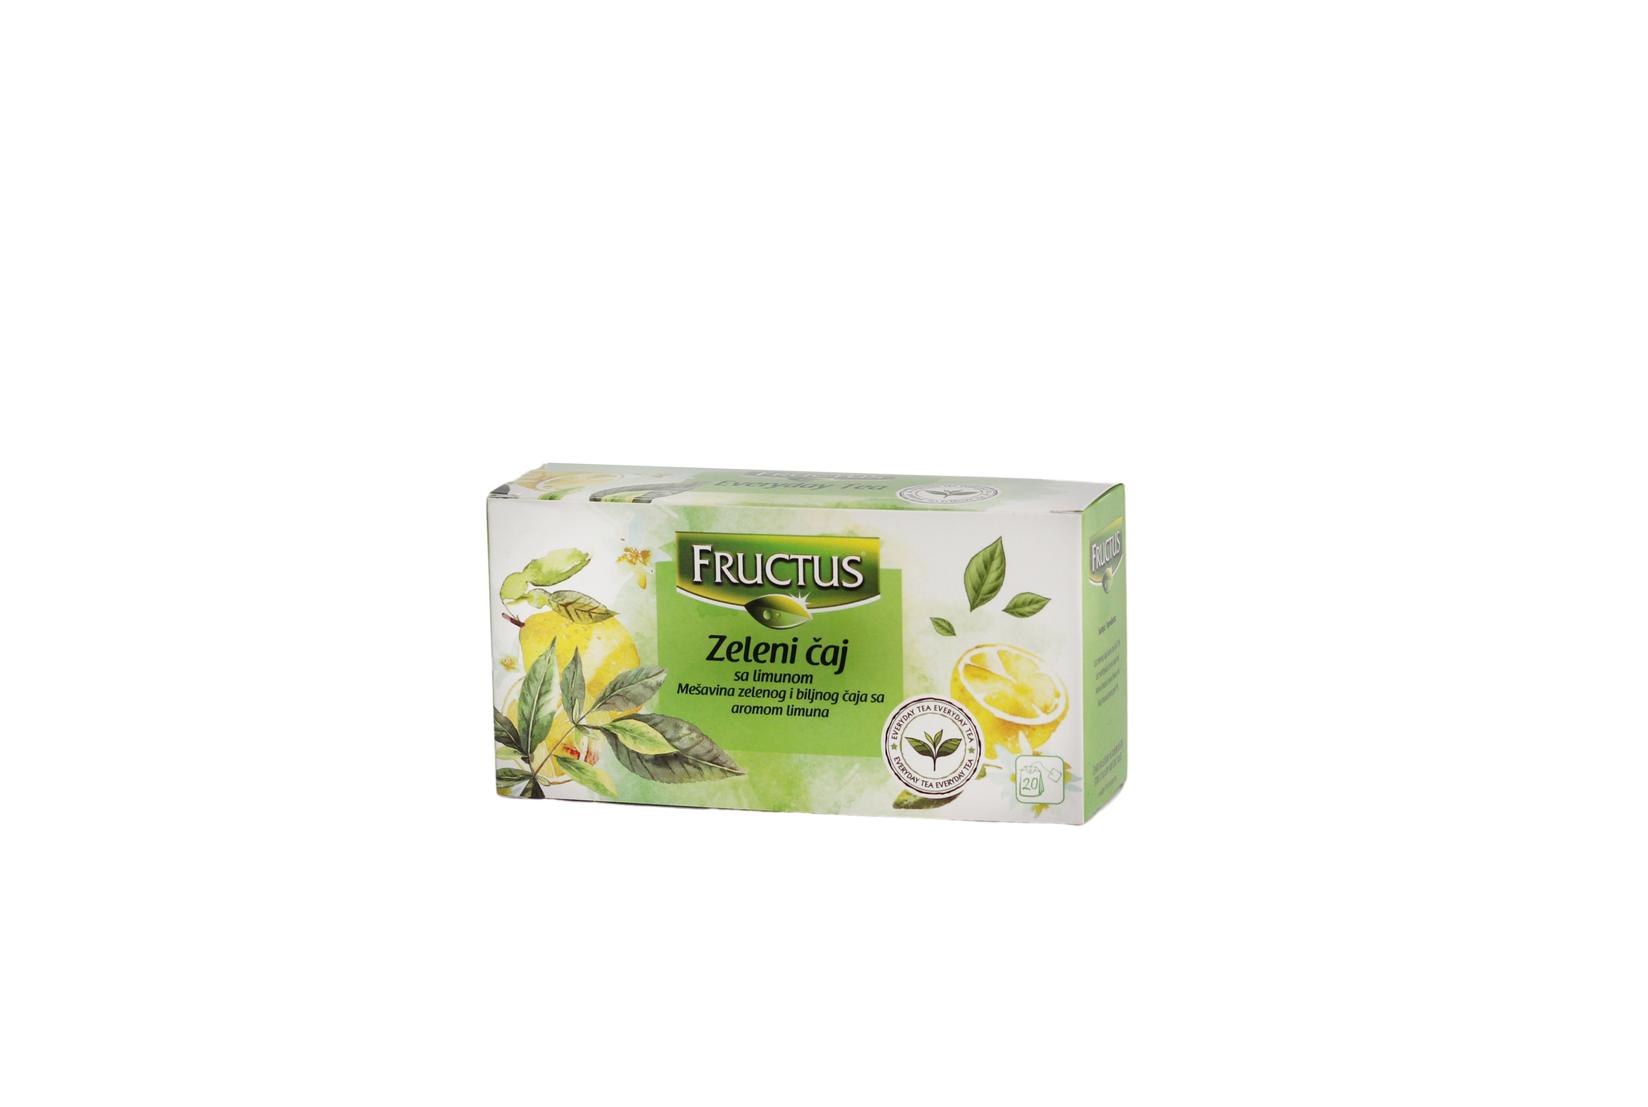 FRUCTUS Zeleni čaj sa limunom 30g, 20x1.5g